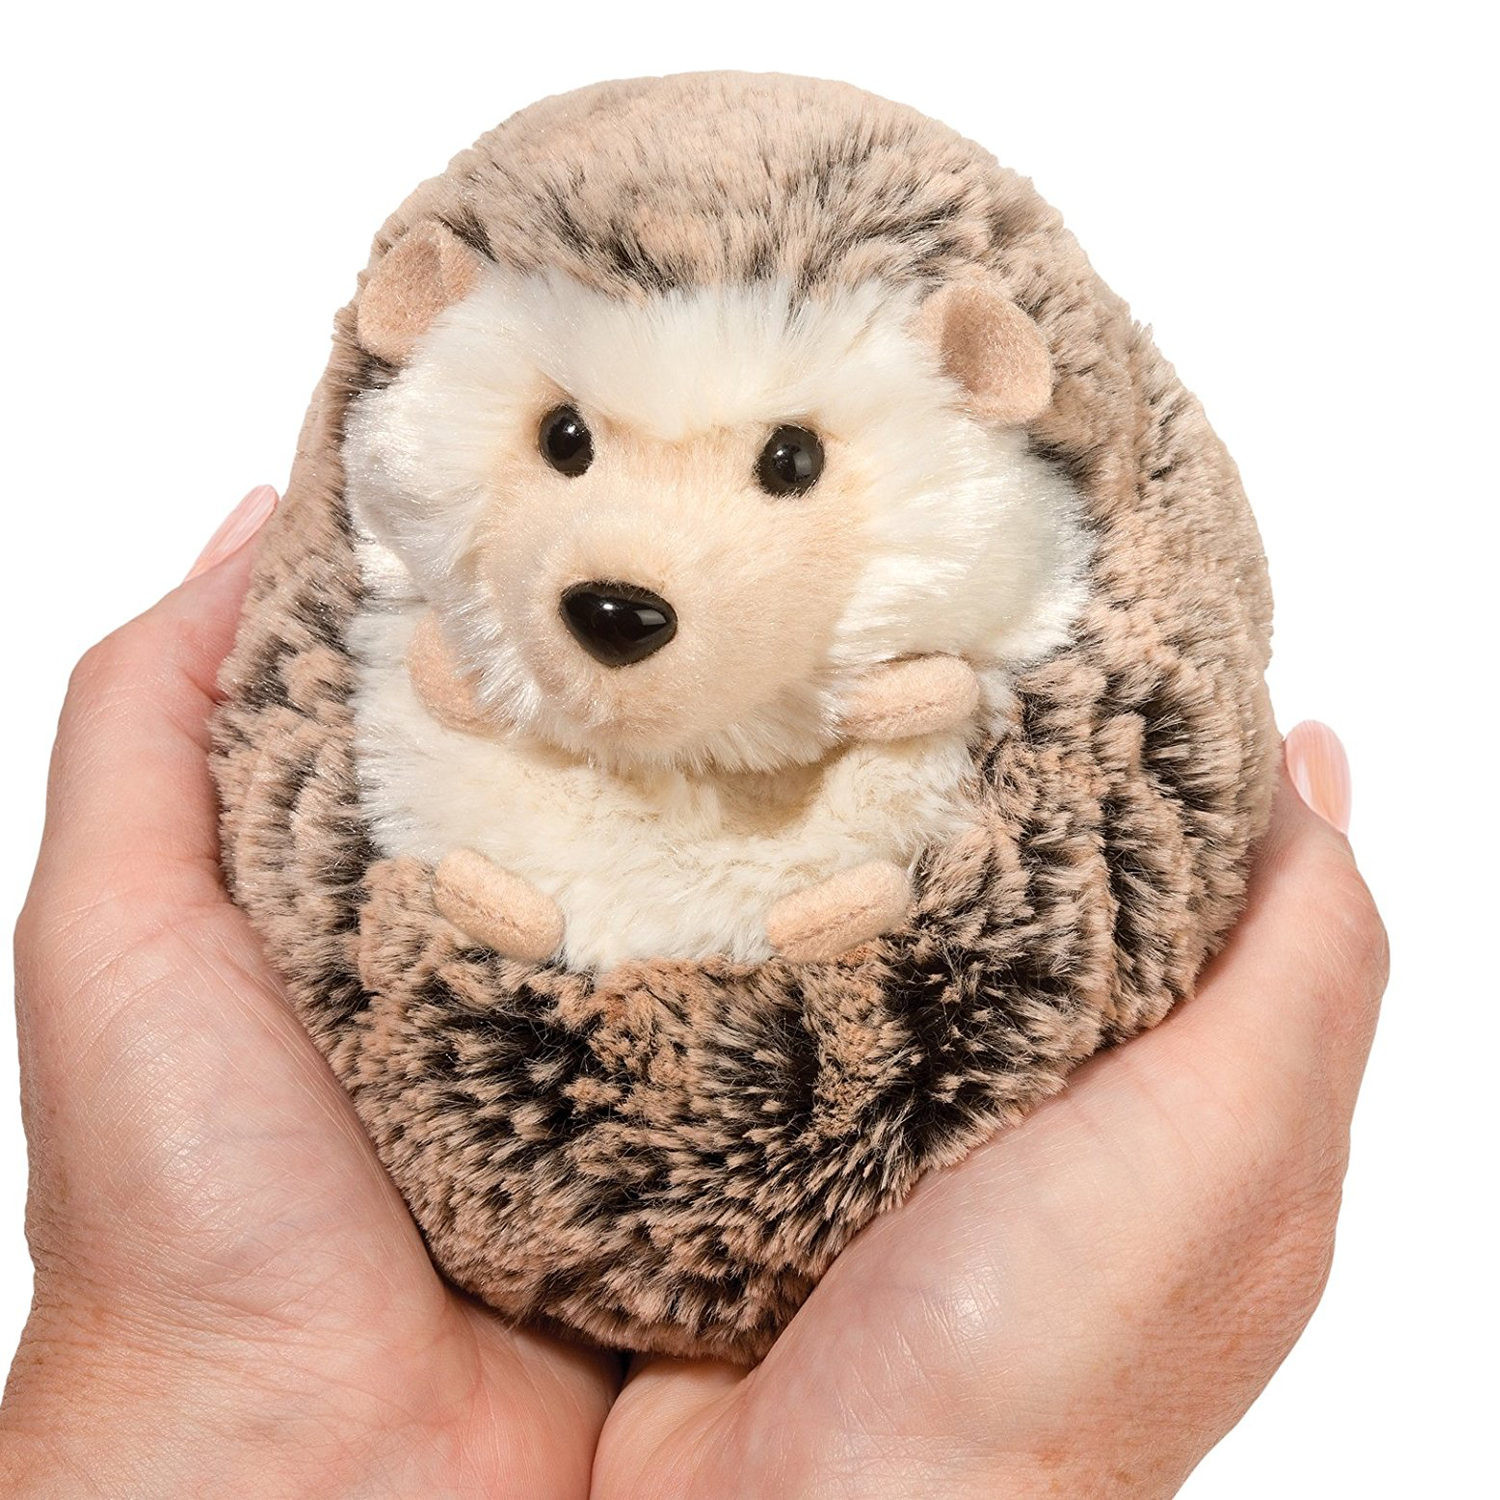 where can i buy cute stuffed animals